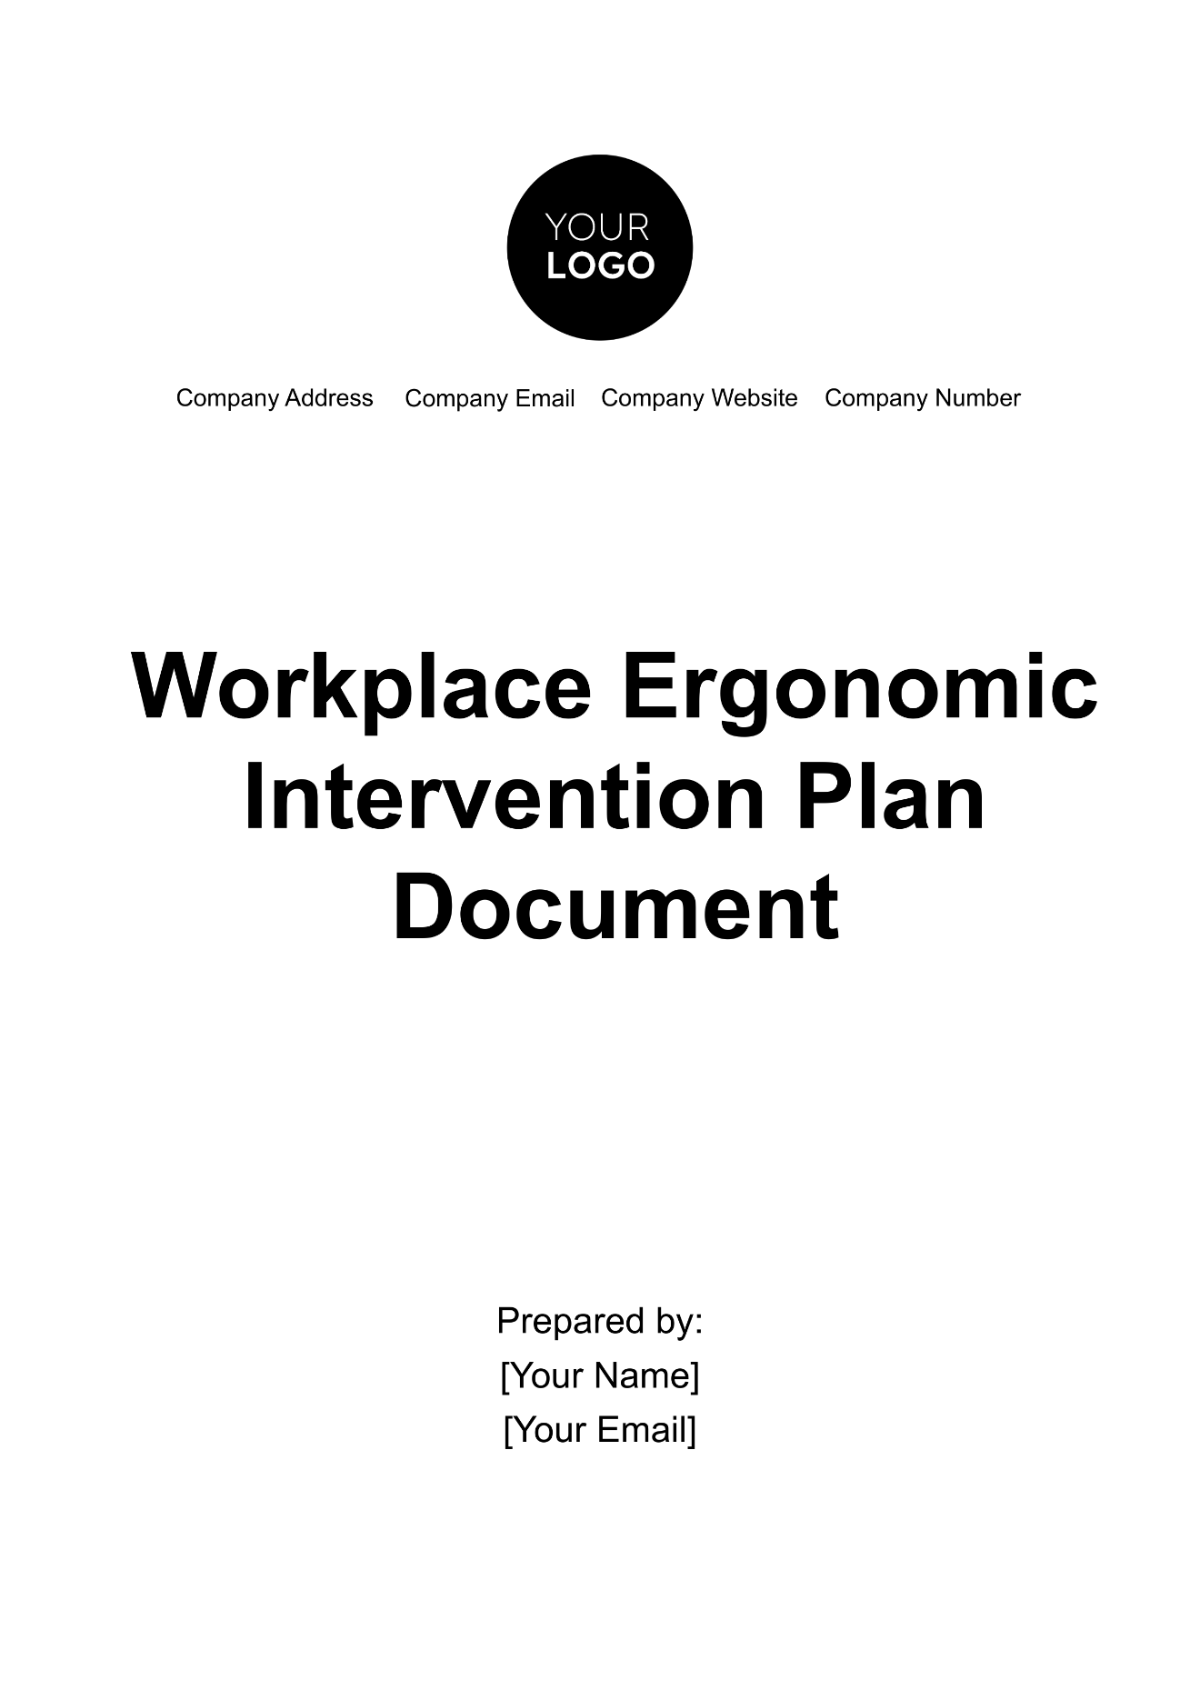 Workplace Ergonomic Intervention Plan Document Template